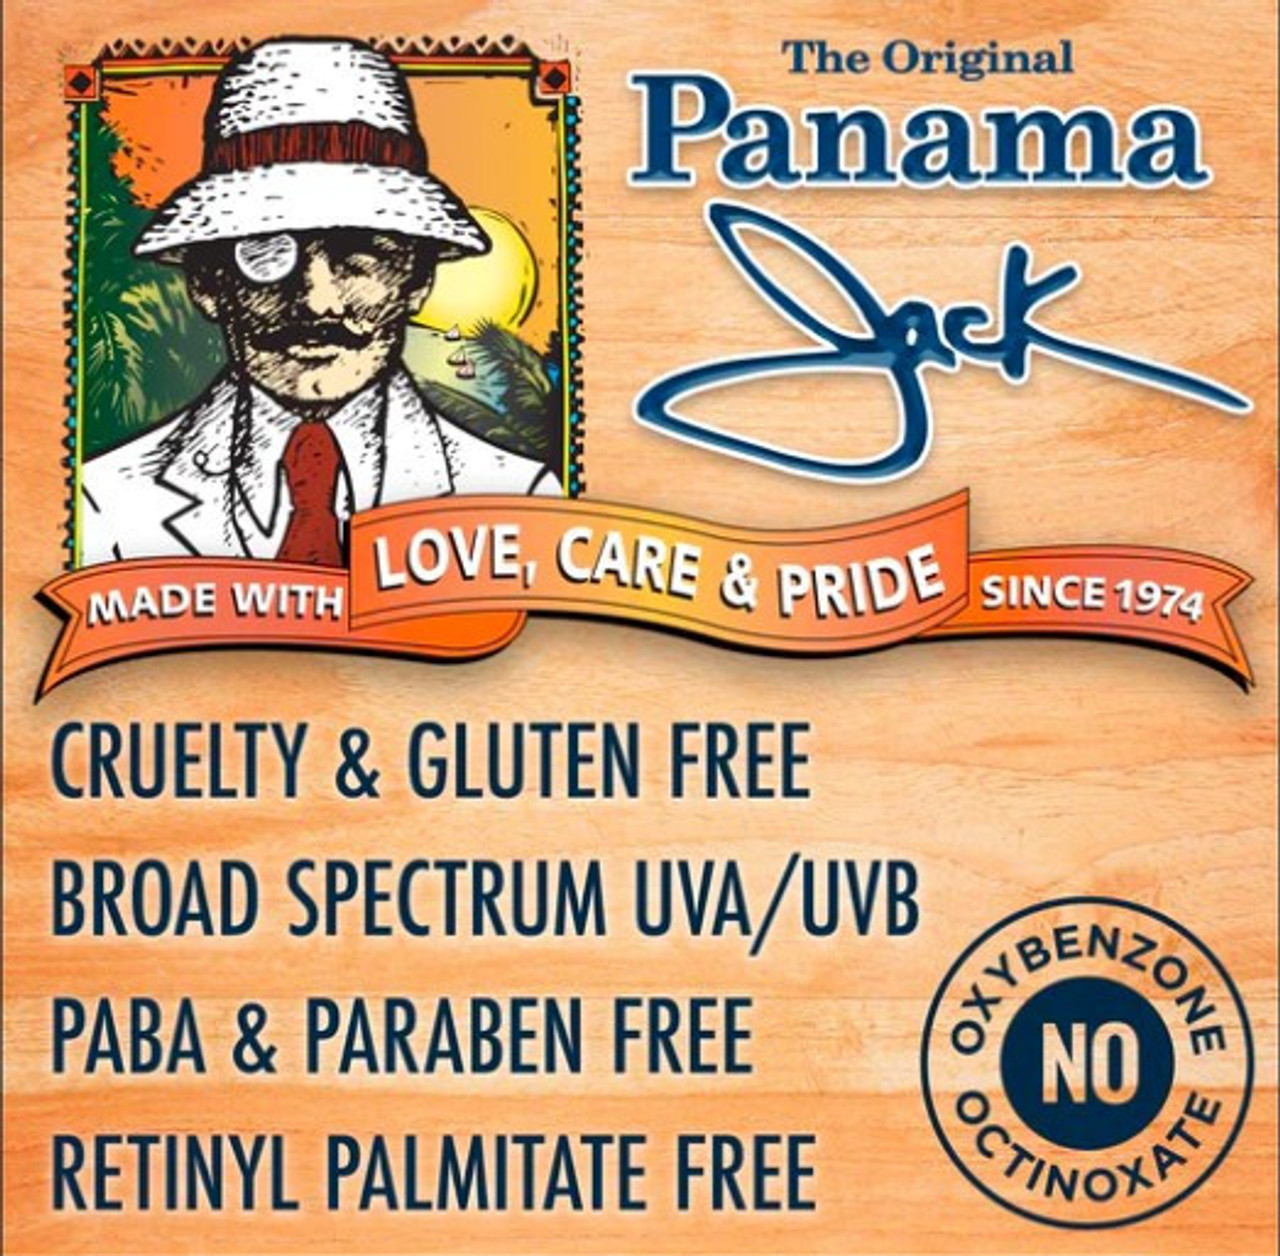 Panama Jack 6 oz. SPF 8 Sunscreen Lotion